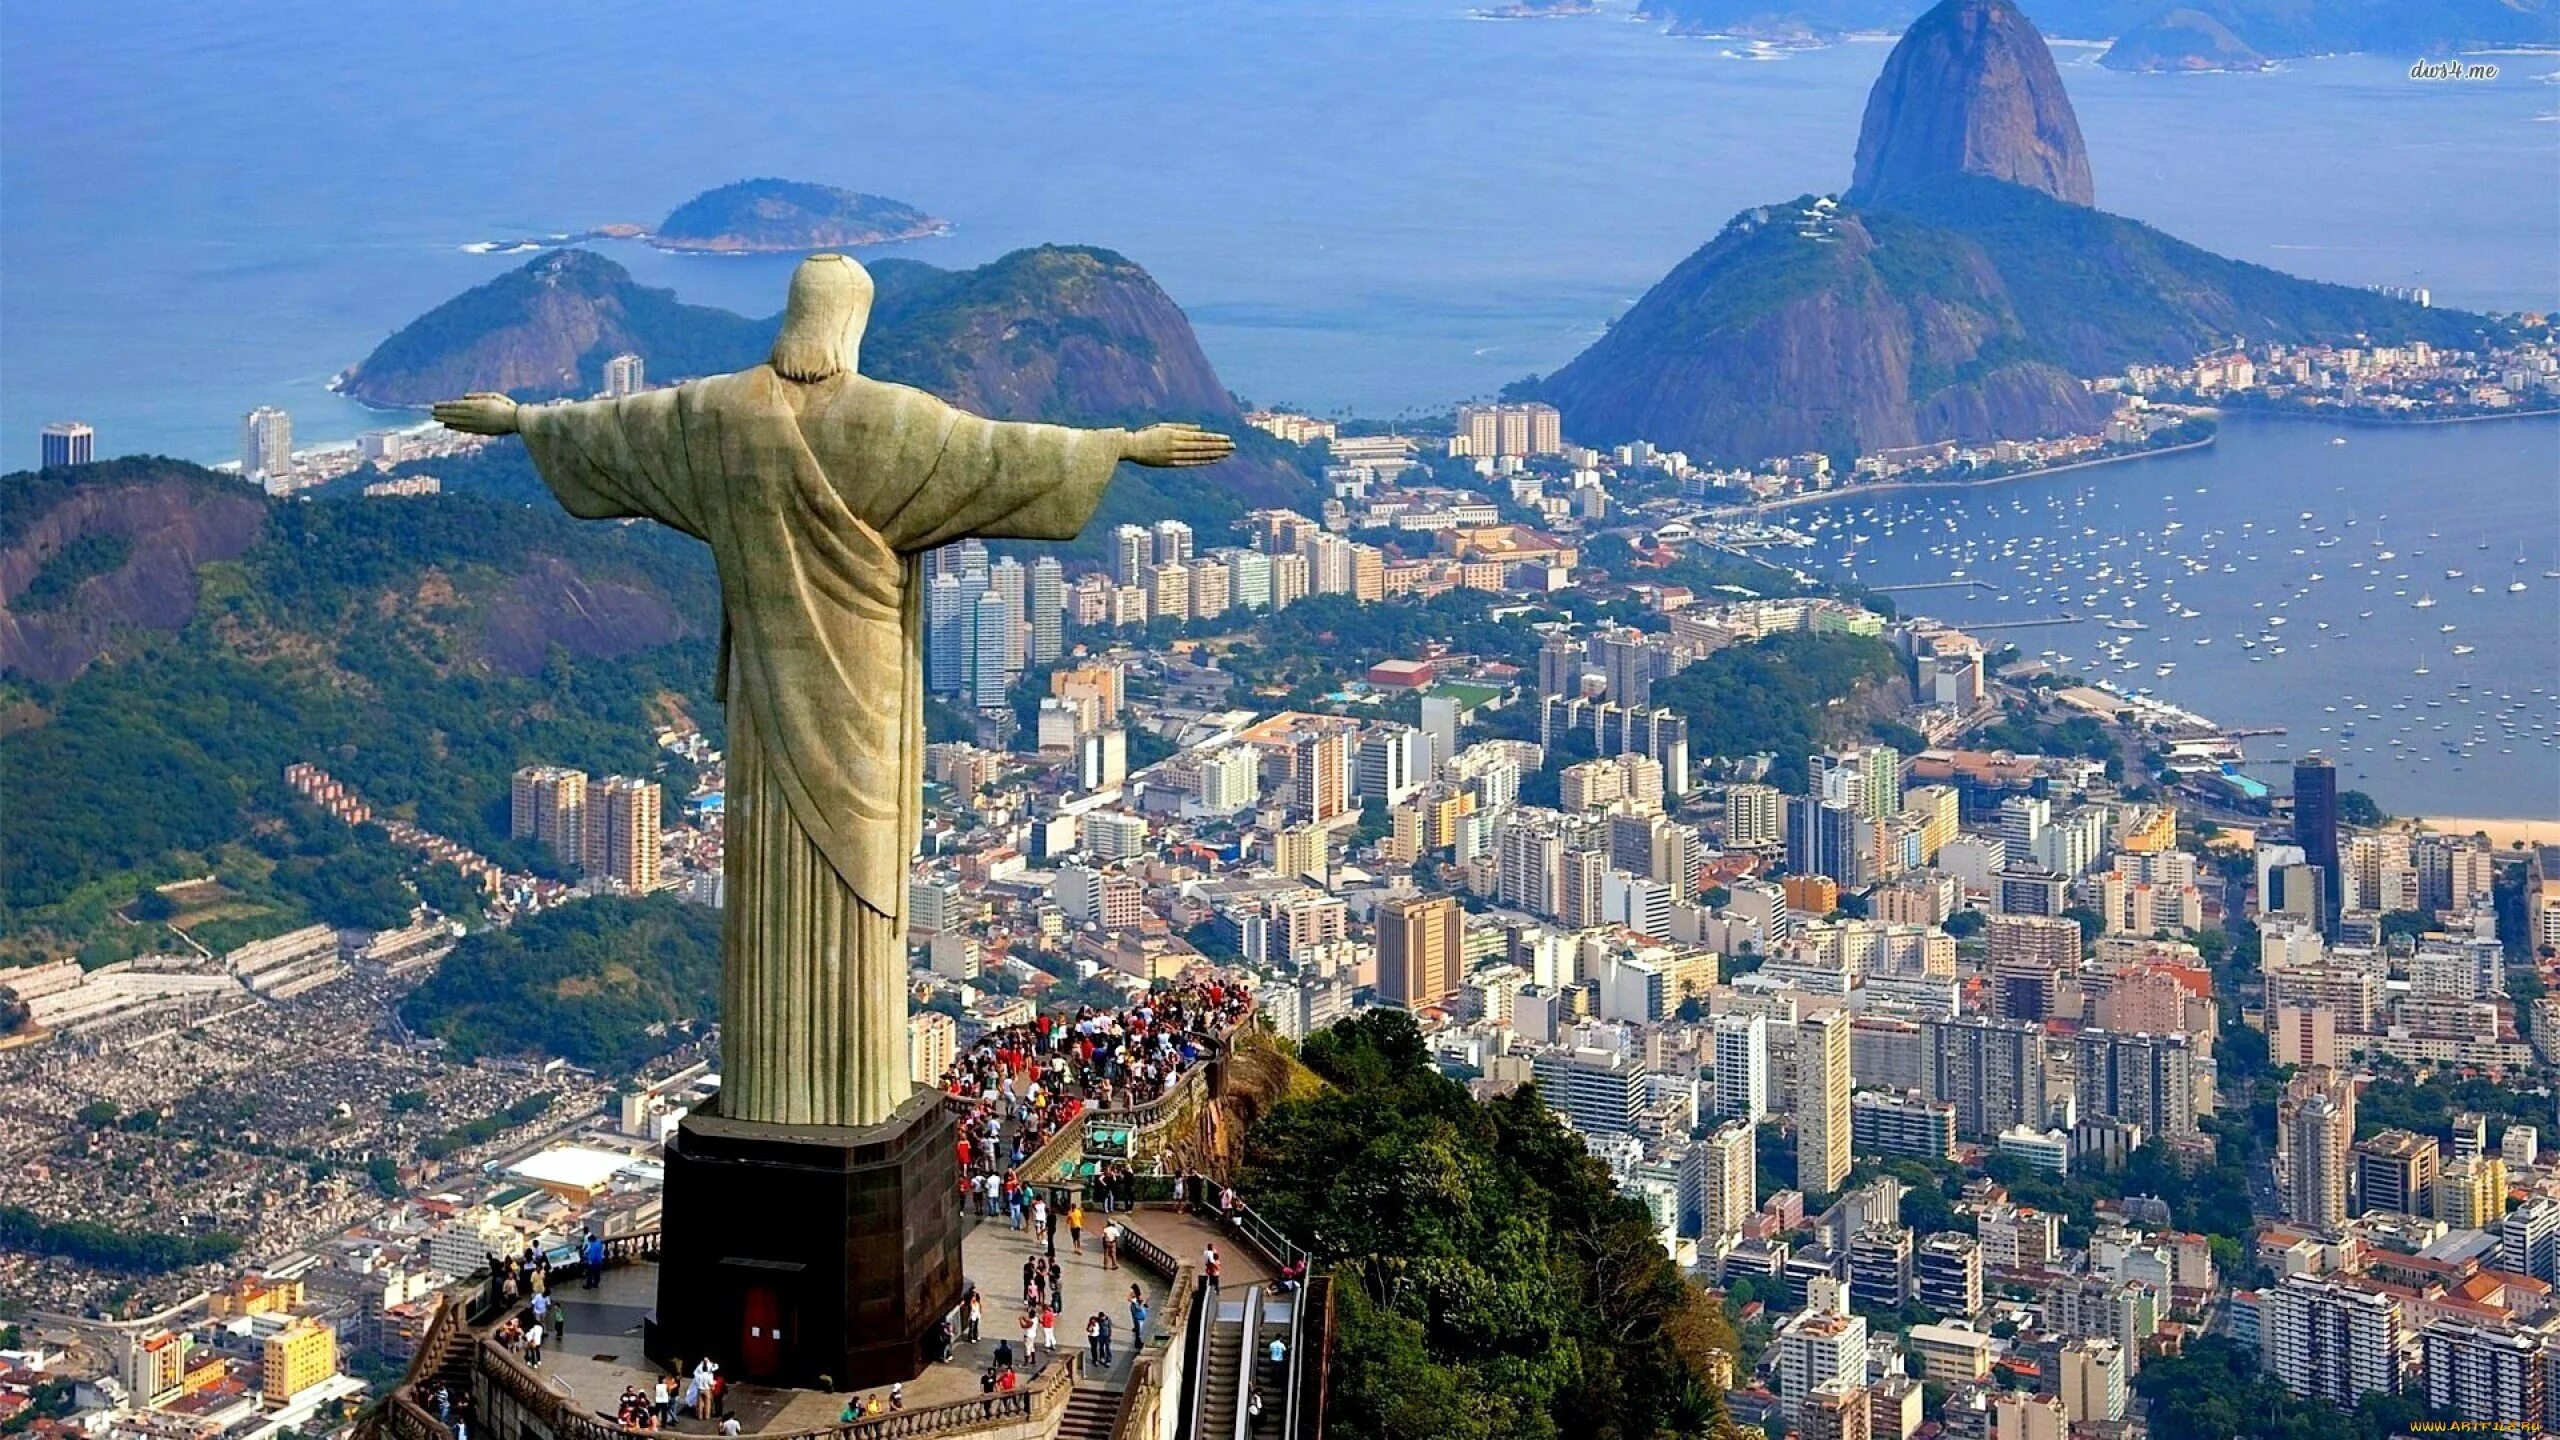 Статуя Христа в Рио-де-Жанейро. Статуя Христа-Искупителя Рио-де-Жанейро. Бразилия Рио де Жанейро. Статуя Христа Искупителя Аргентина.